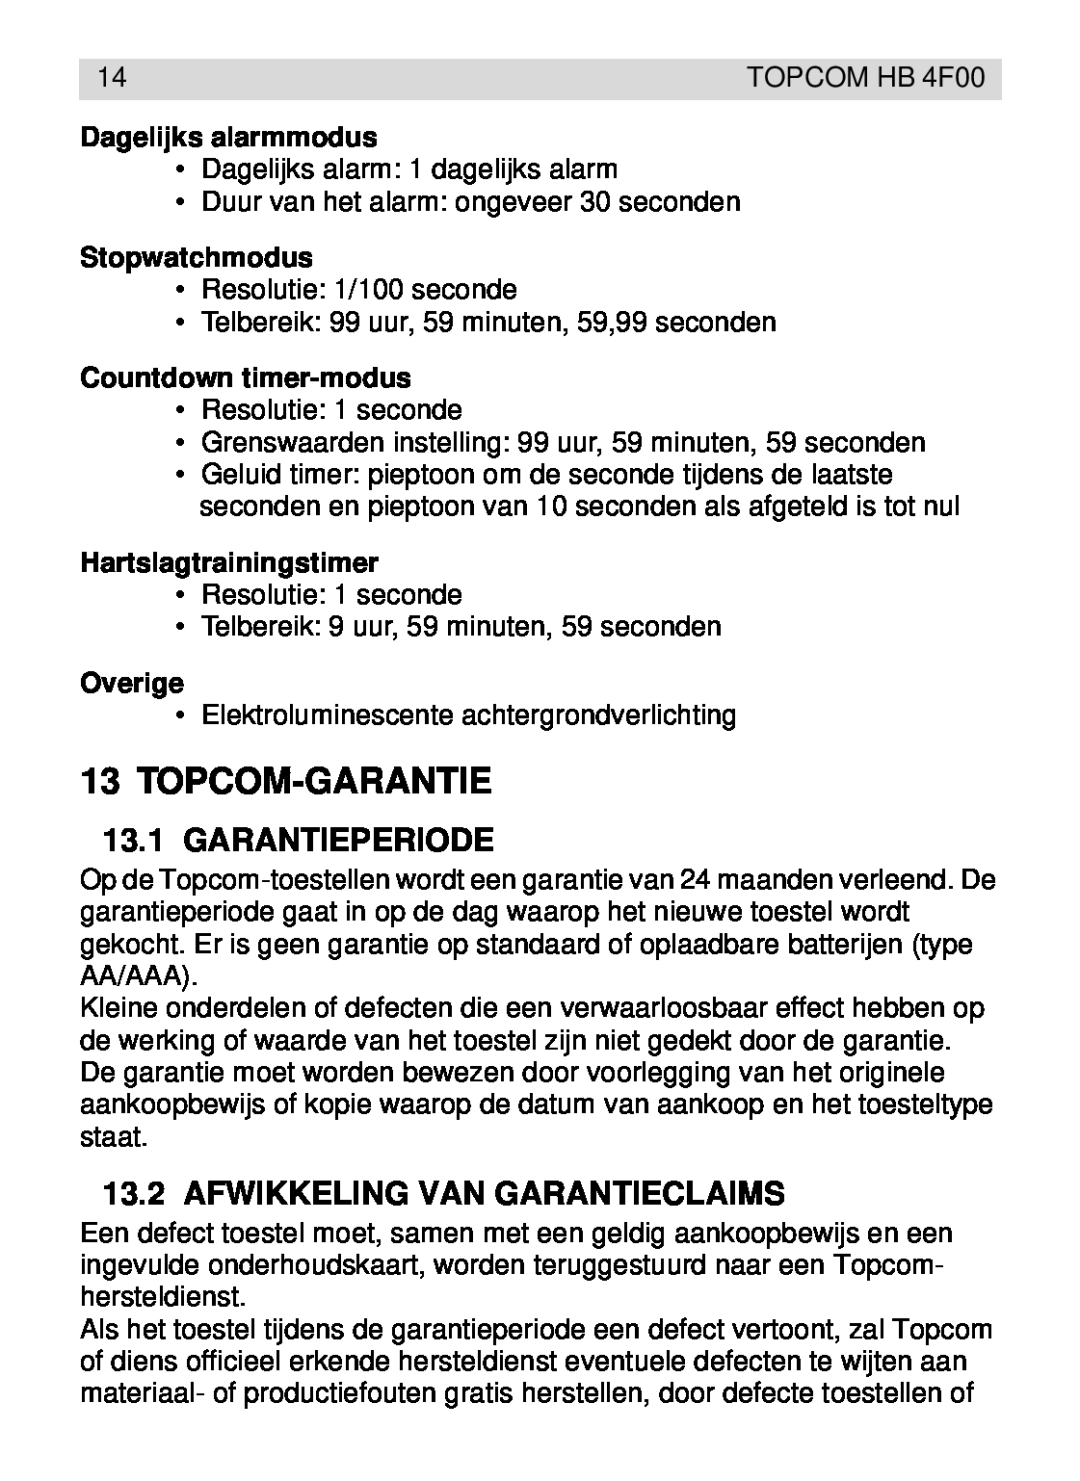 Topcom HB 4F00 Topcom-Garantie, Garantieperiode, Afwikkeling Van Garantieclaims, Dagelijks alarmmodus, Stopwatchmodus 